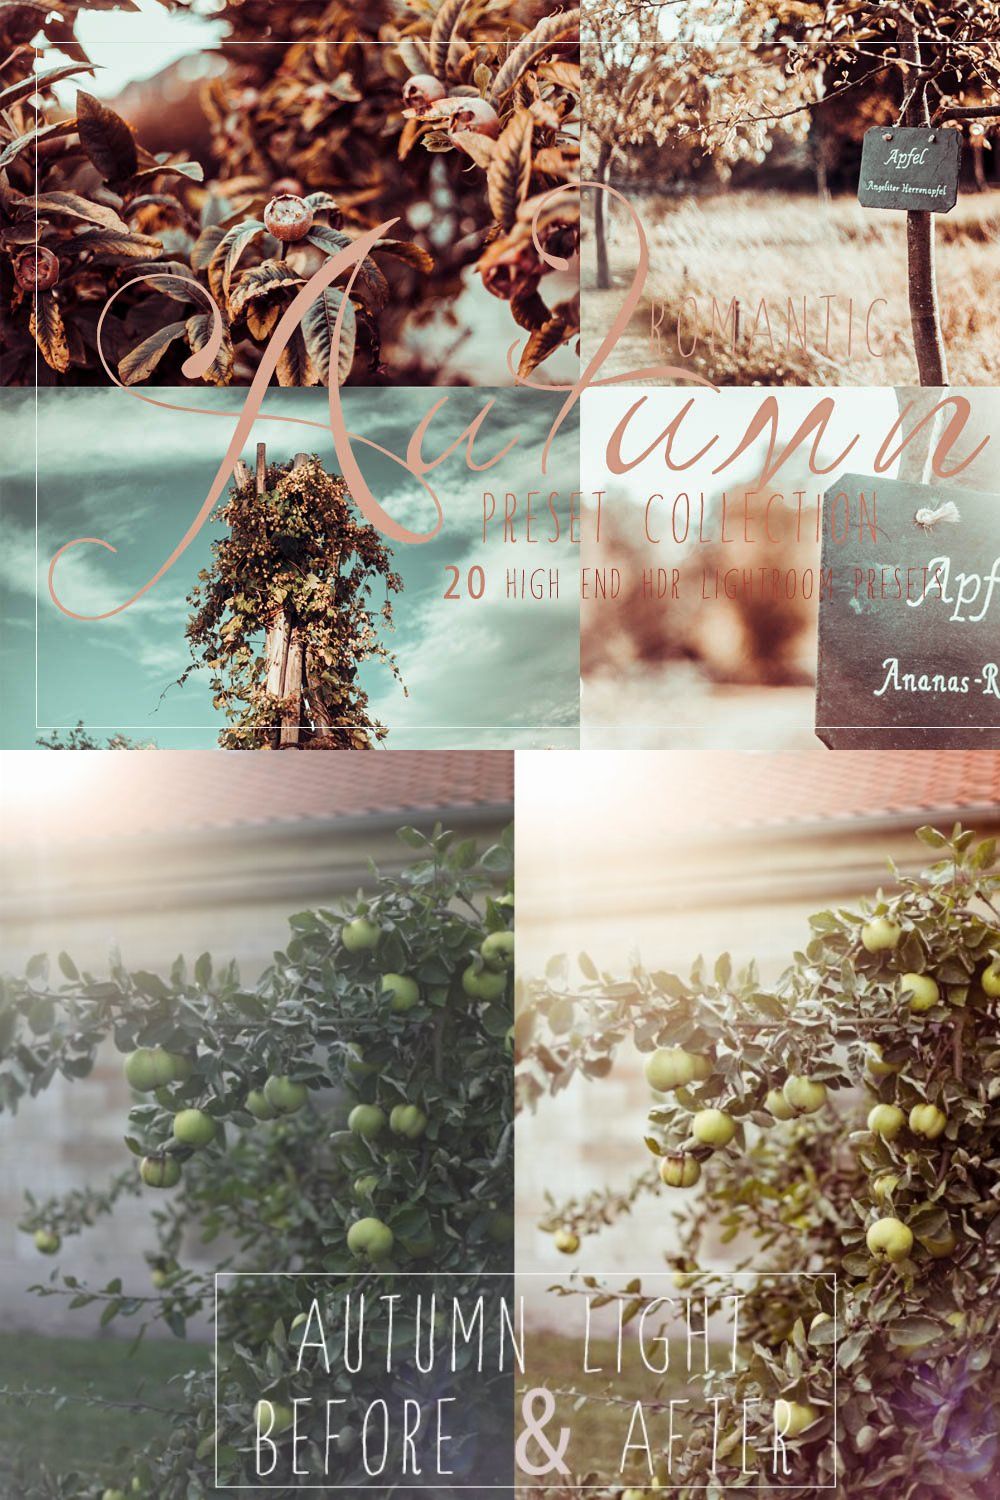 Premium HDR Lightroom Autumn Presets pinterest preview image.